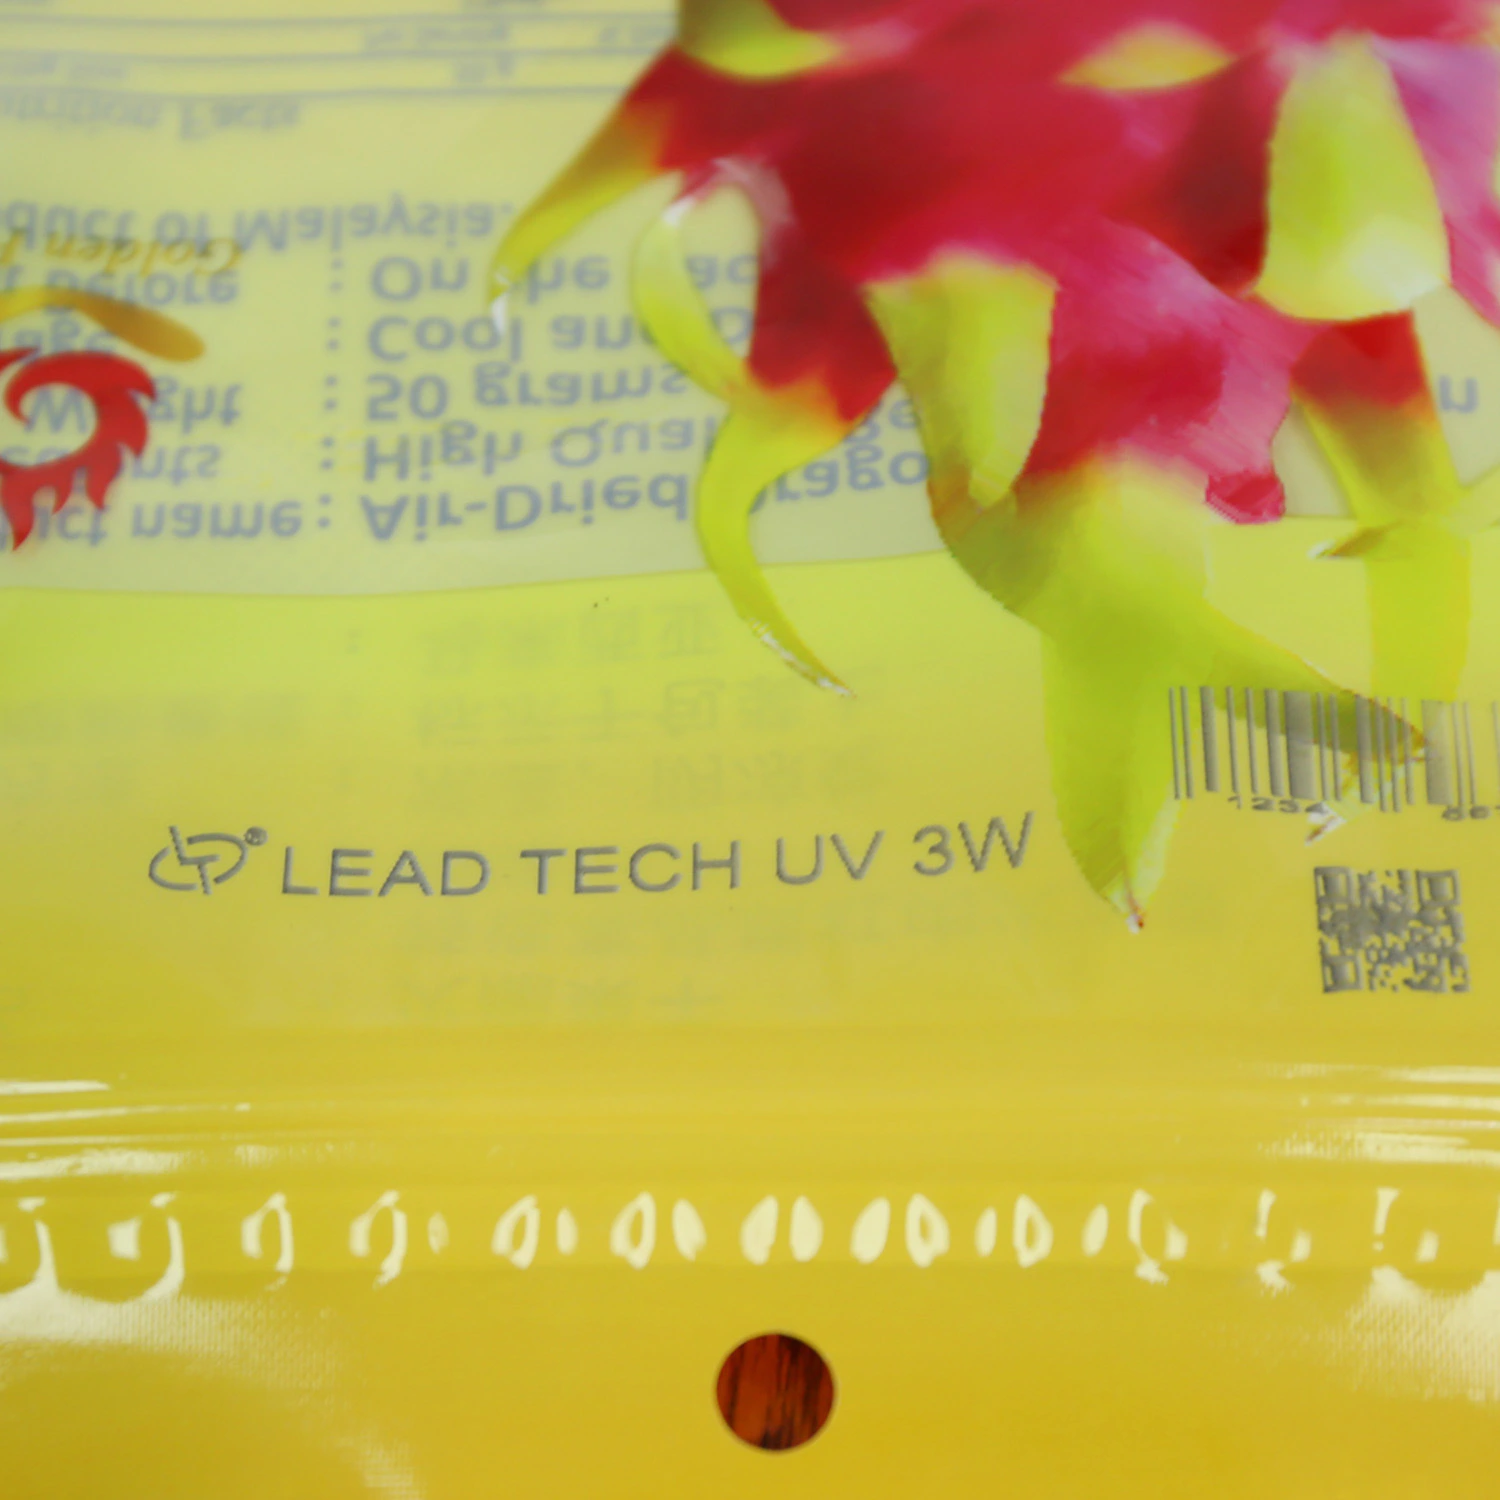 Lead Tech Lt8003u/Lt8005u UV 3W/5W High Precision Laser Engraving Printer for Plate Silver Gold